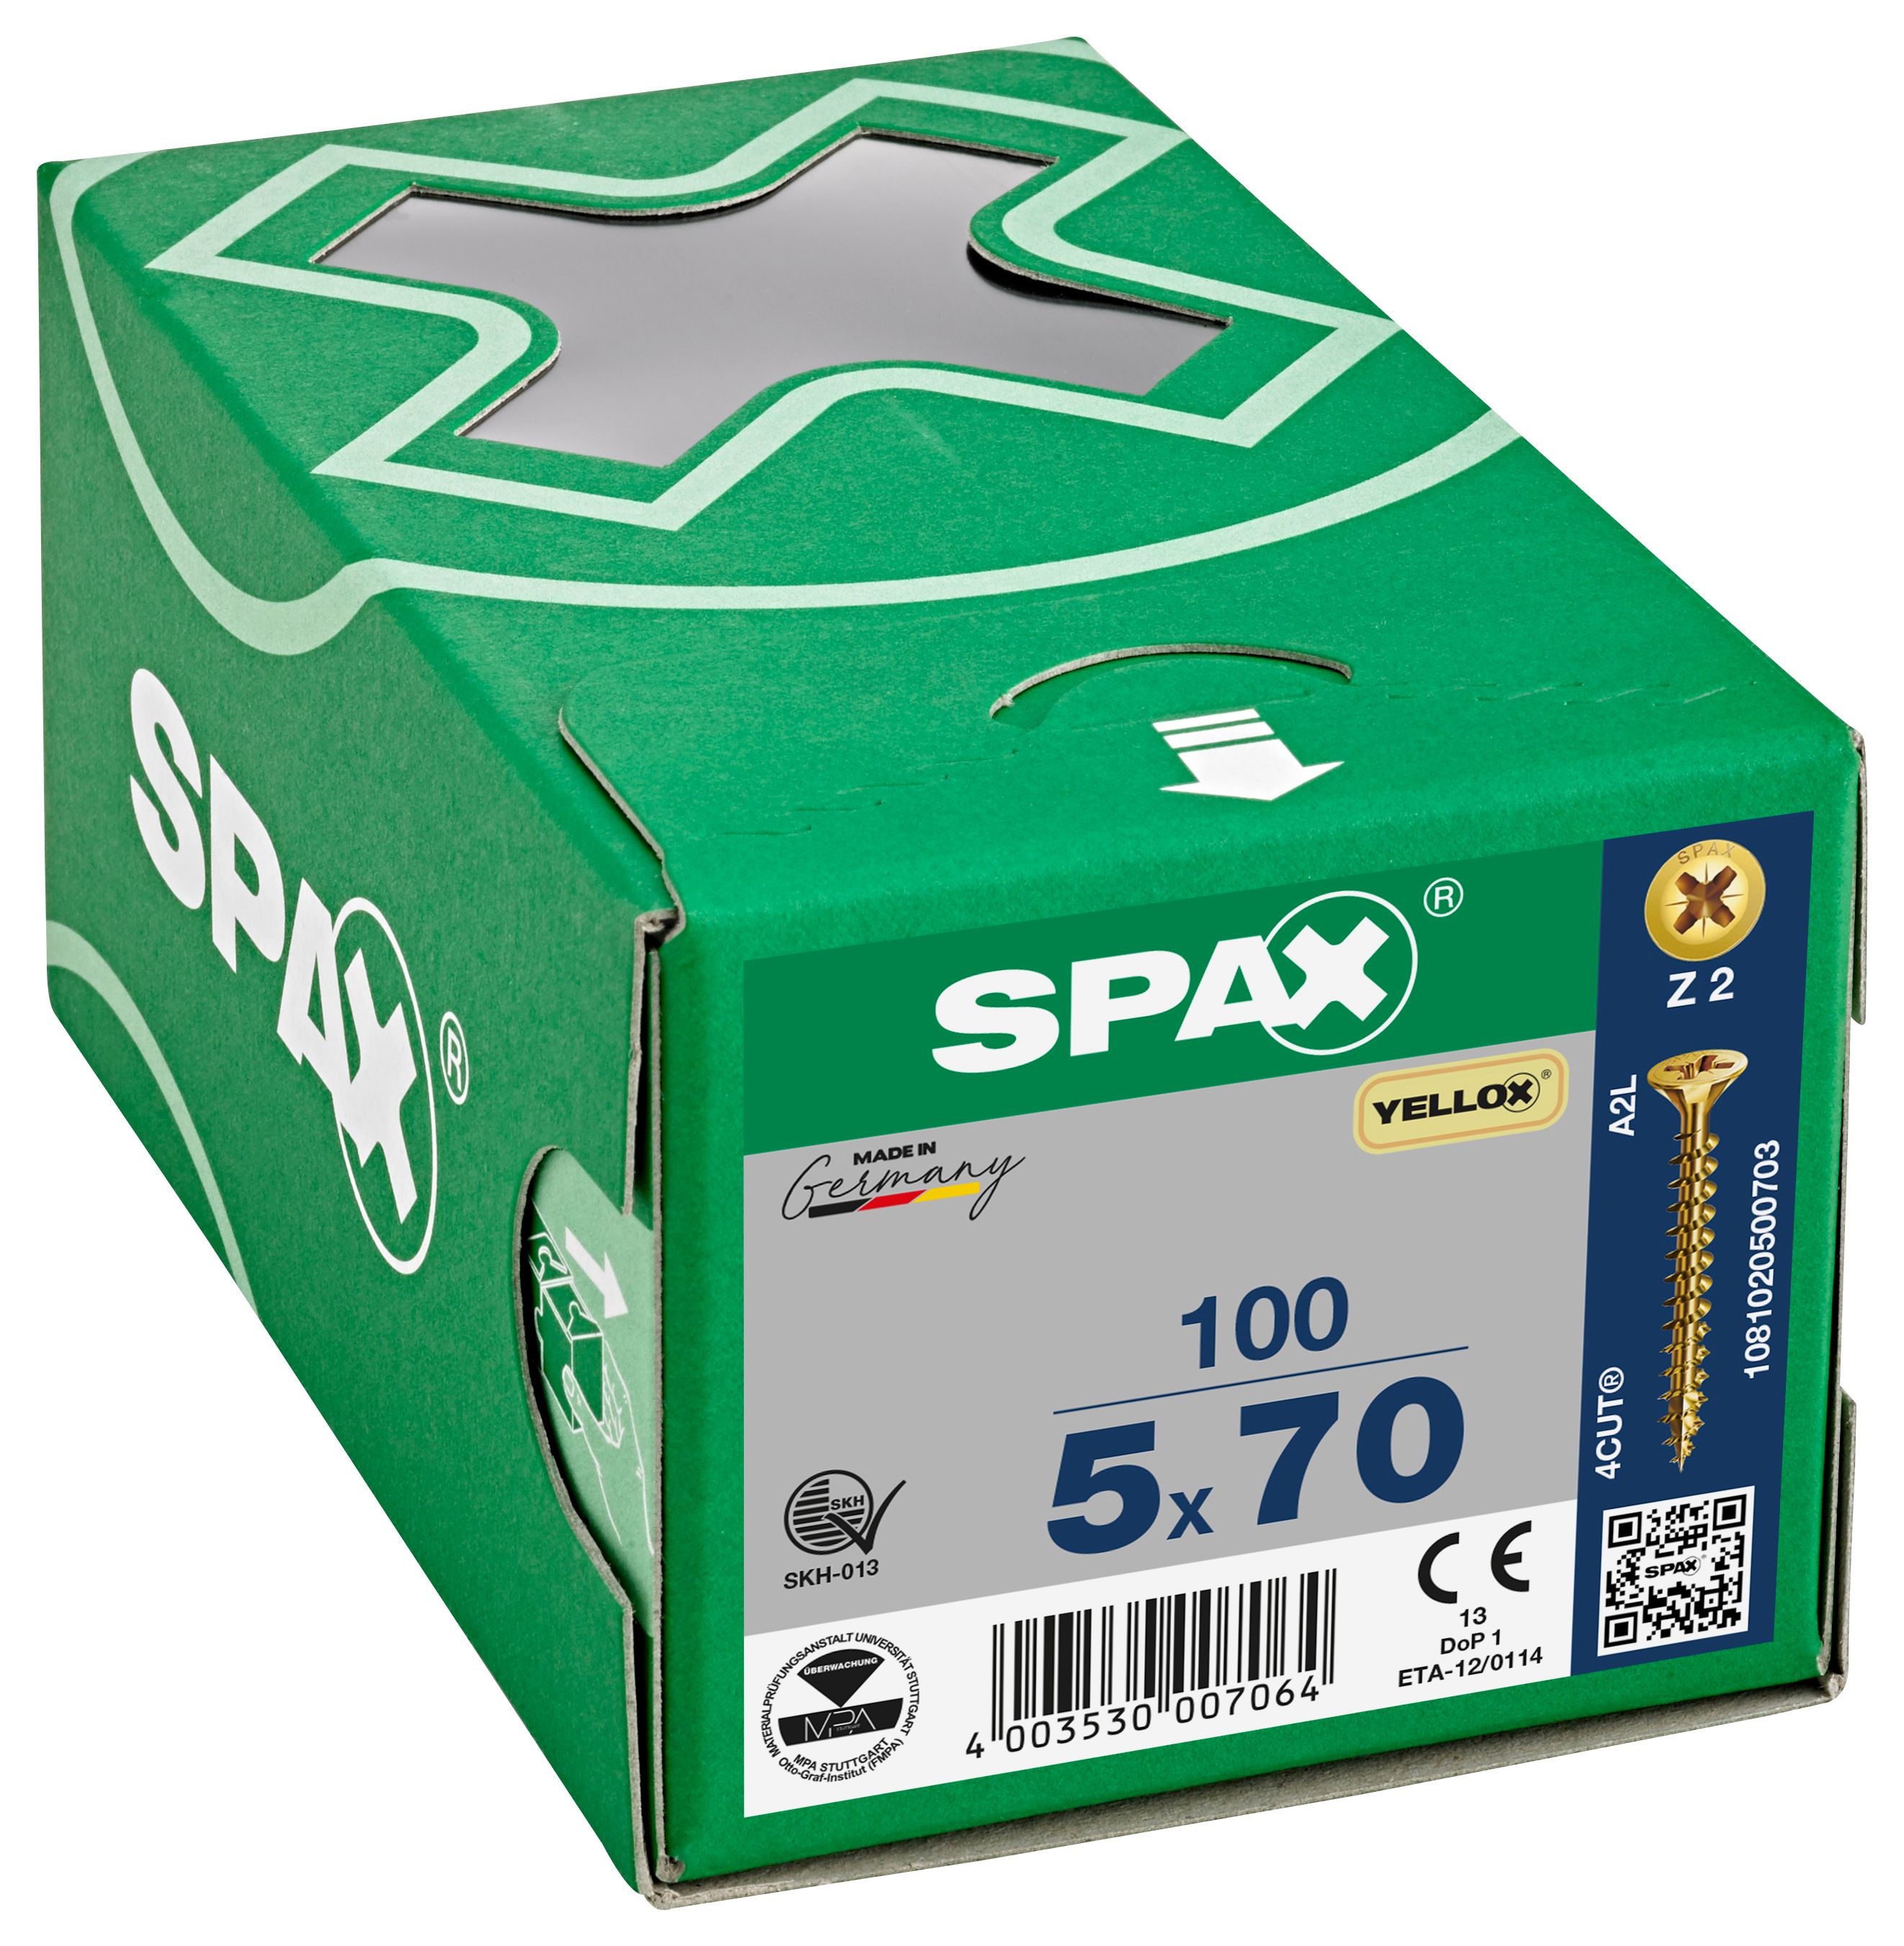 Spax Pz Countersunk Yellox Screws - 5x70mm Pack Of 100